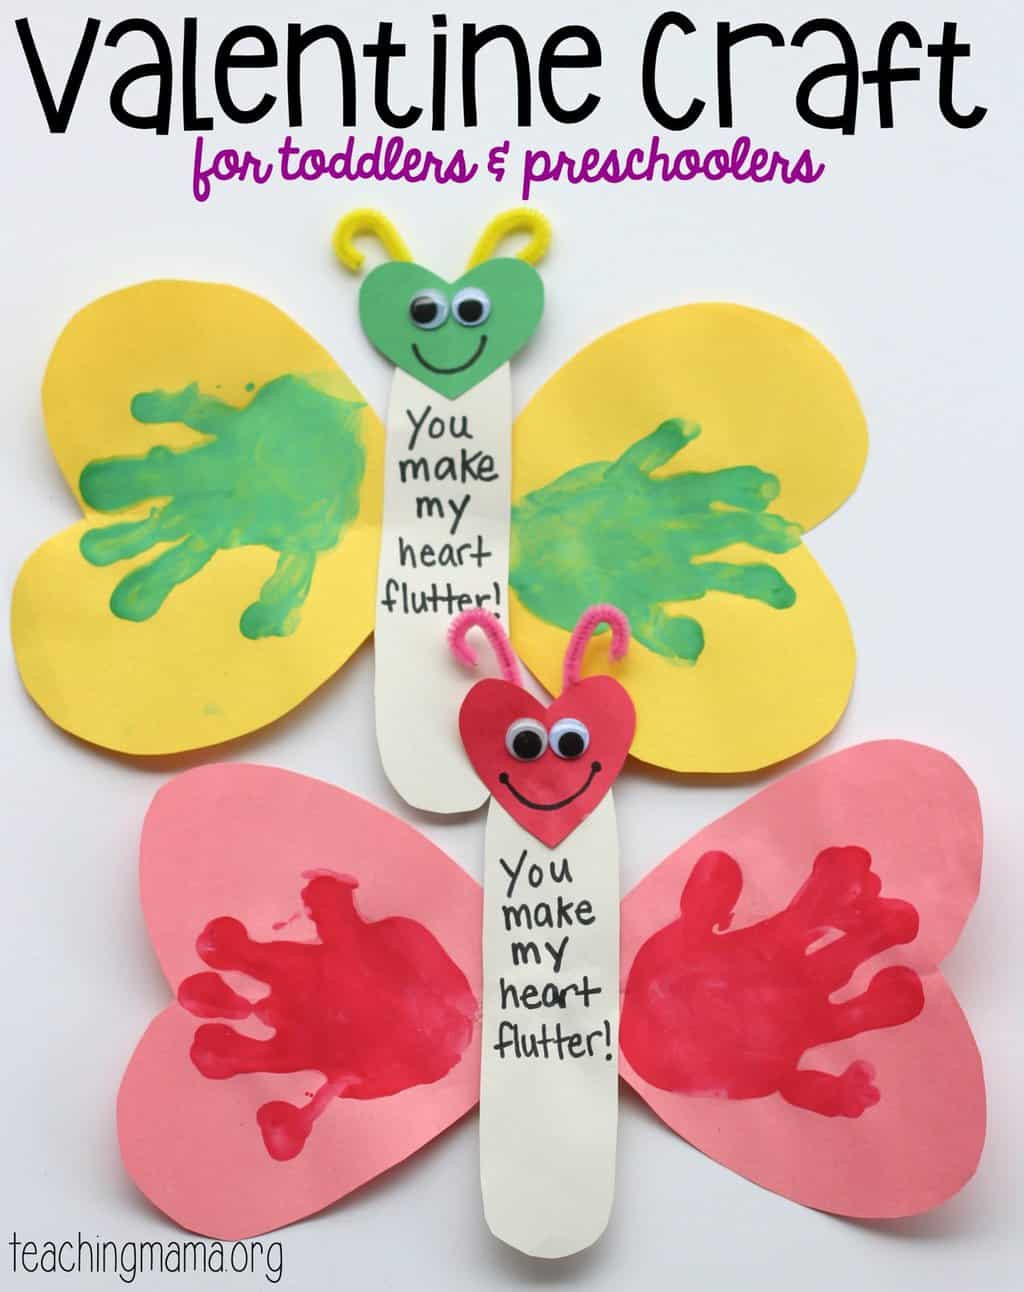 Valentine Craft Ideas For Preschoolers
 13 Creative Valentine s Day Crafts for Kids SoCal Field